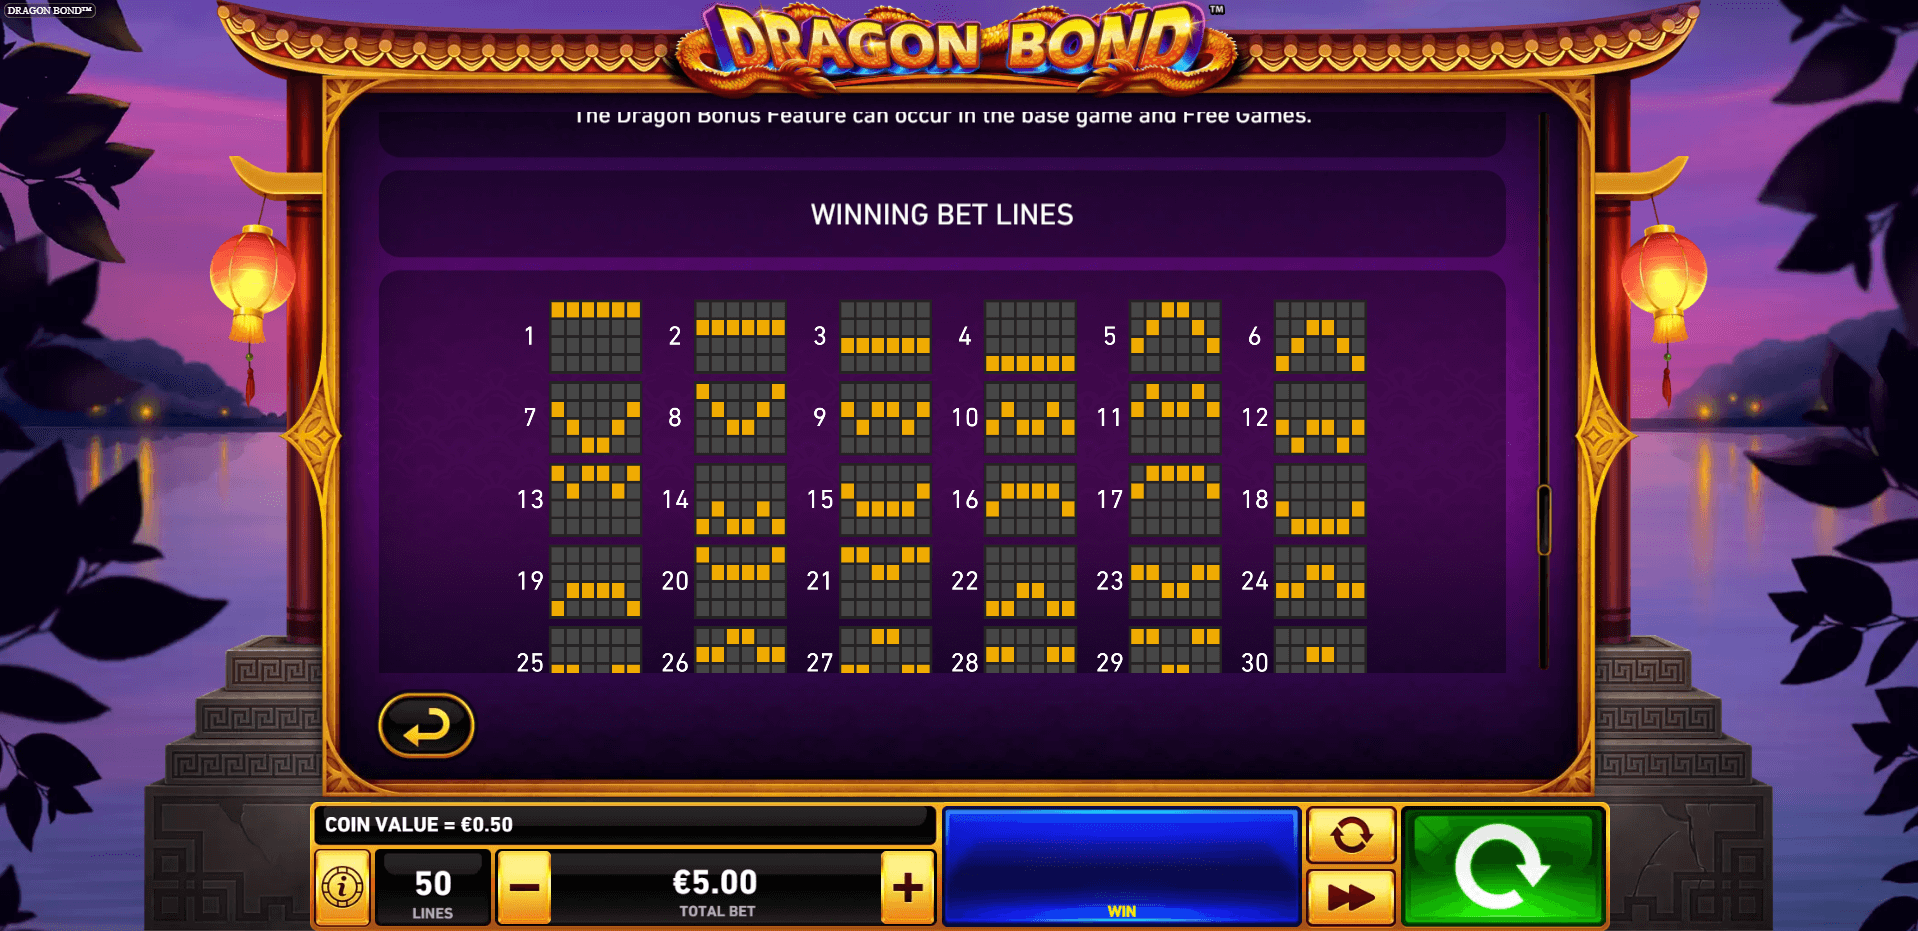 Dragon Bond Slot Machine ᗎ Play FREE Casino Game Online by Playtech